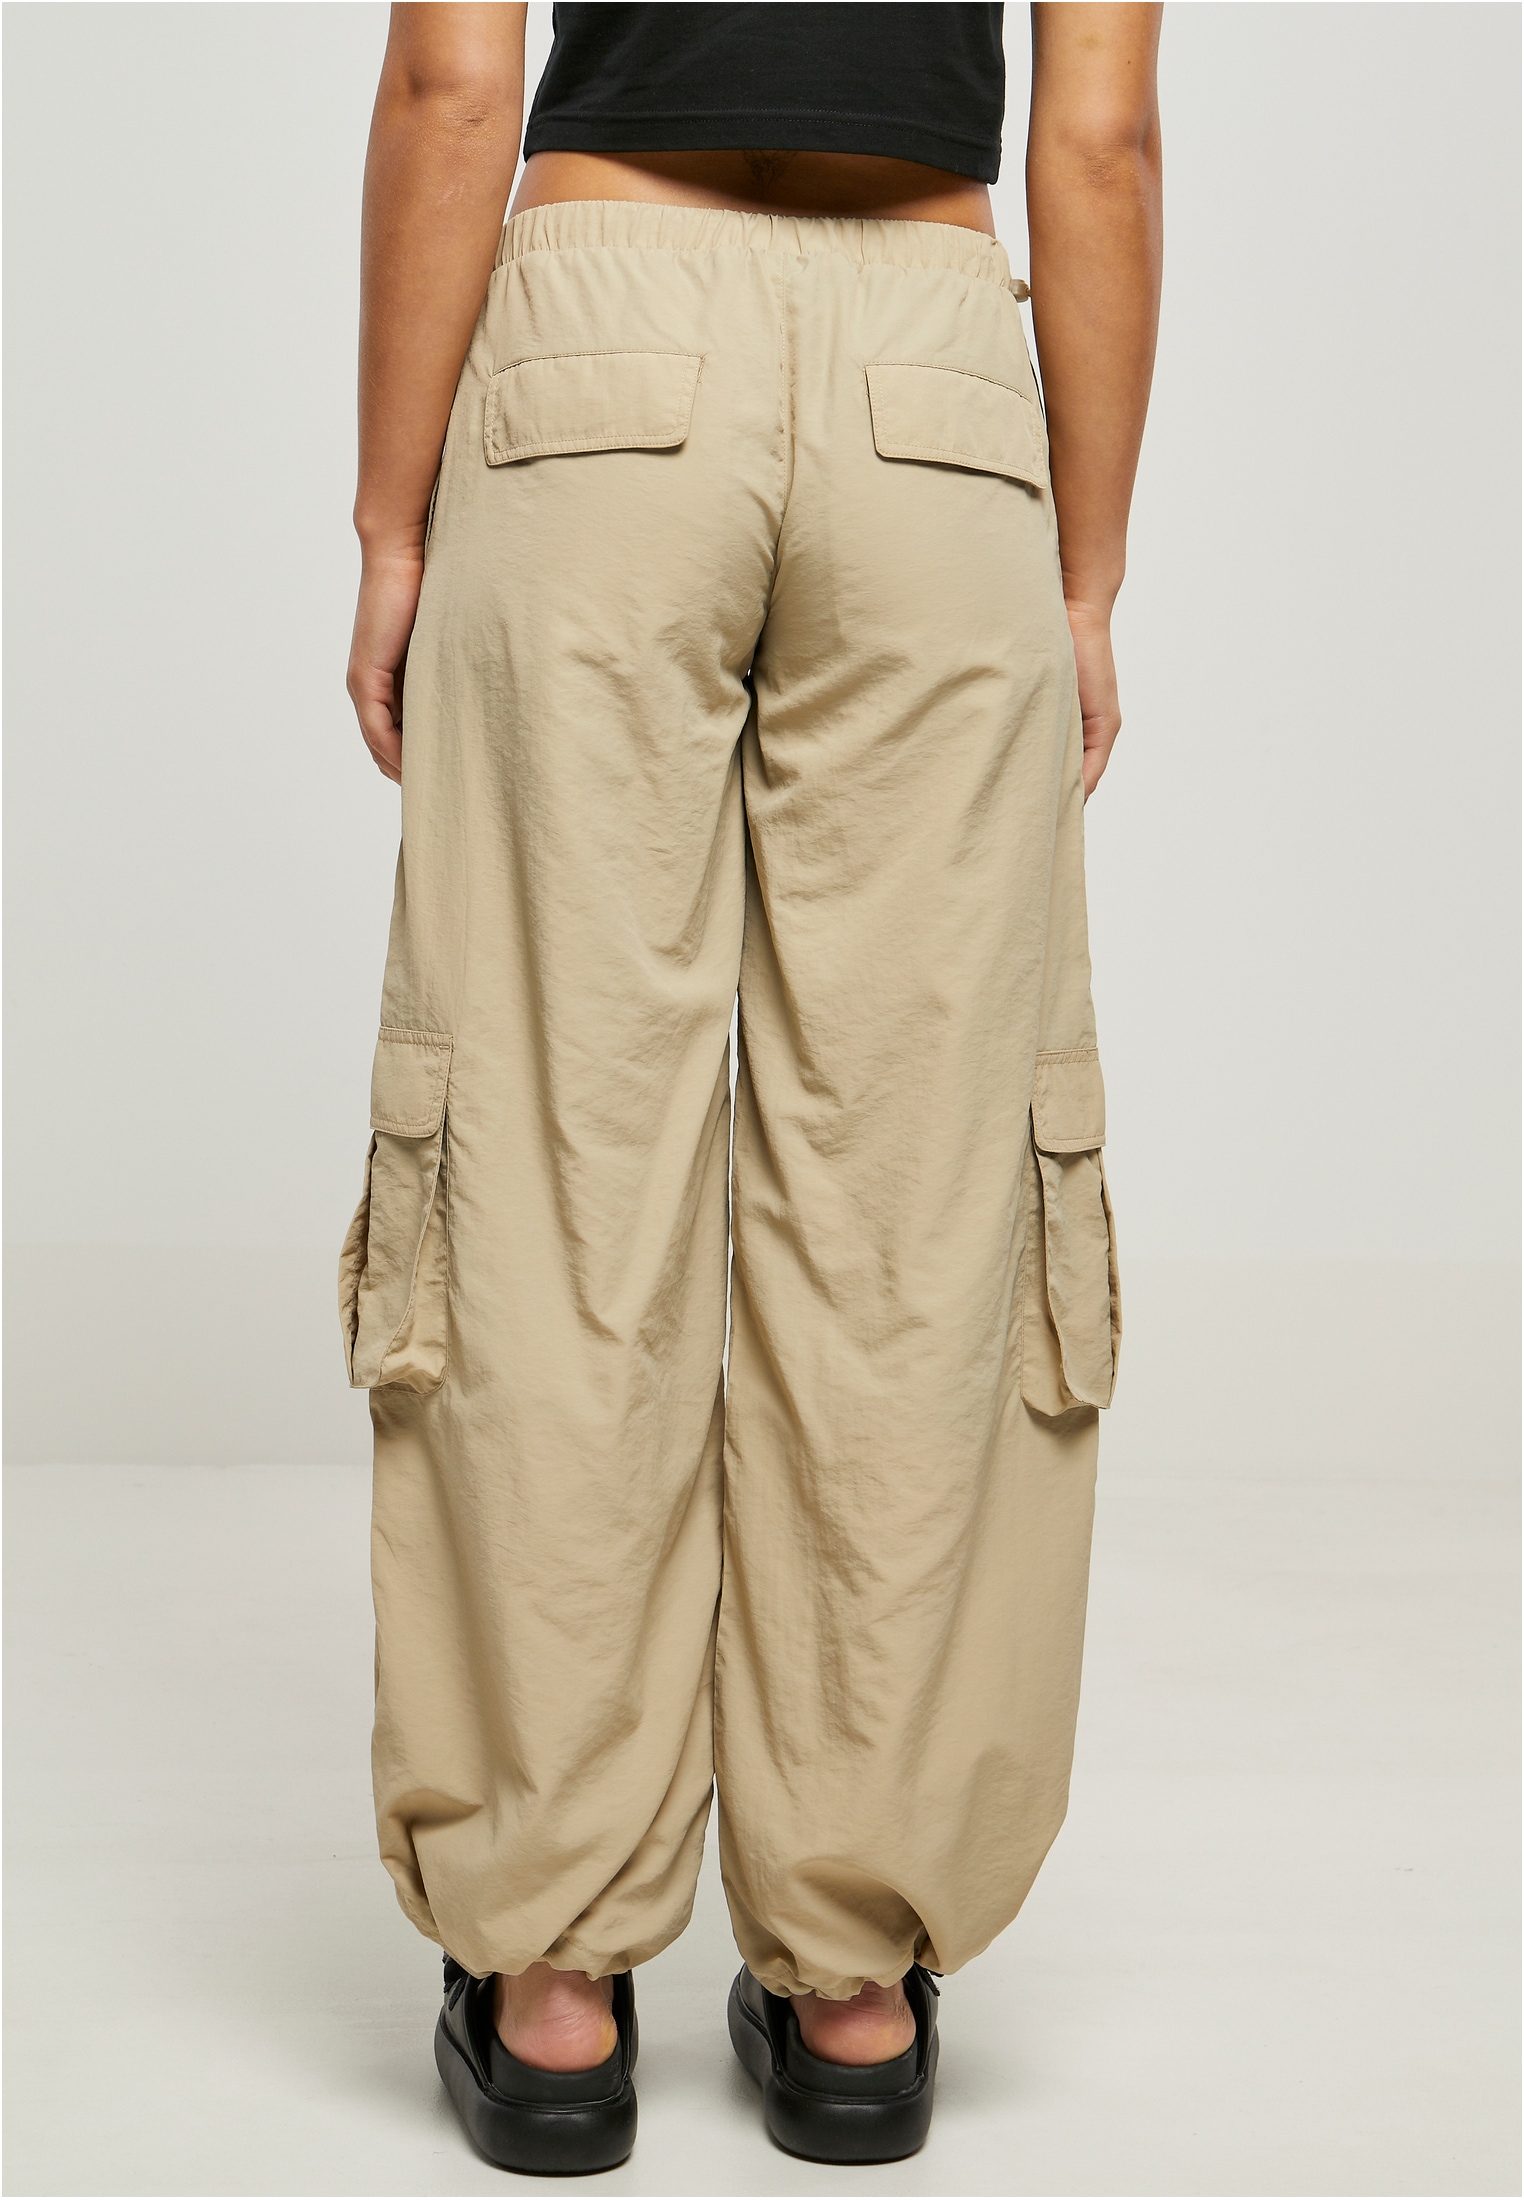 CLASSICS Nylon tlg.) online »Damen Wide (1 URBAN Ladies Stoffhose Pants«, Cargo Crinkle